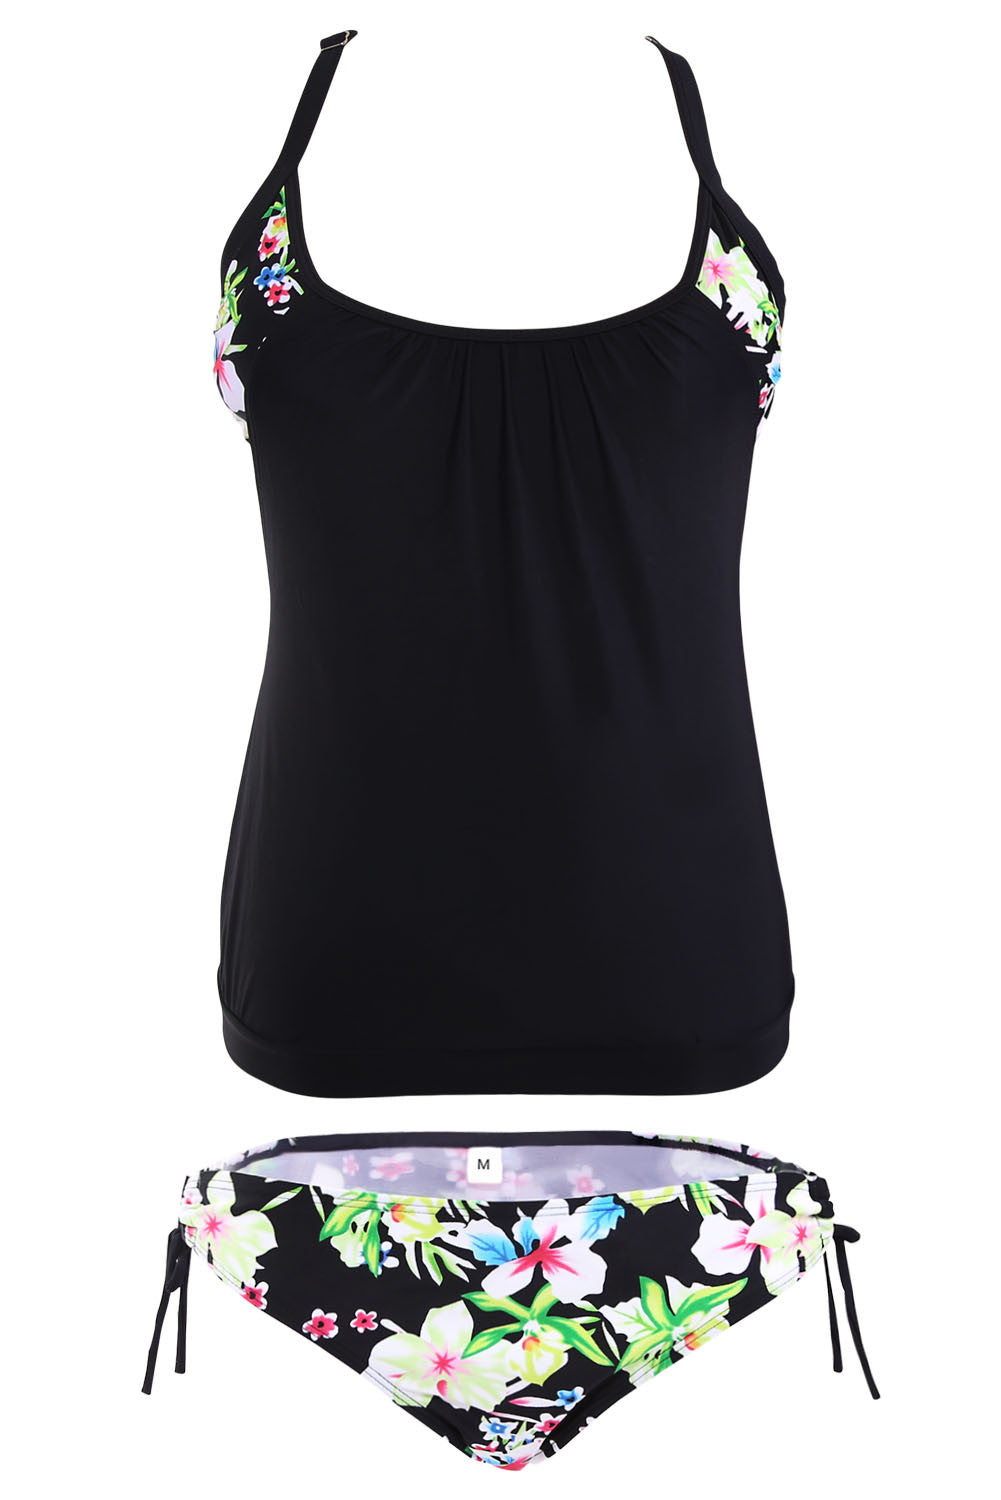 Black Layered-Style Floral Tankini Swimwear with Triangular Briefs